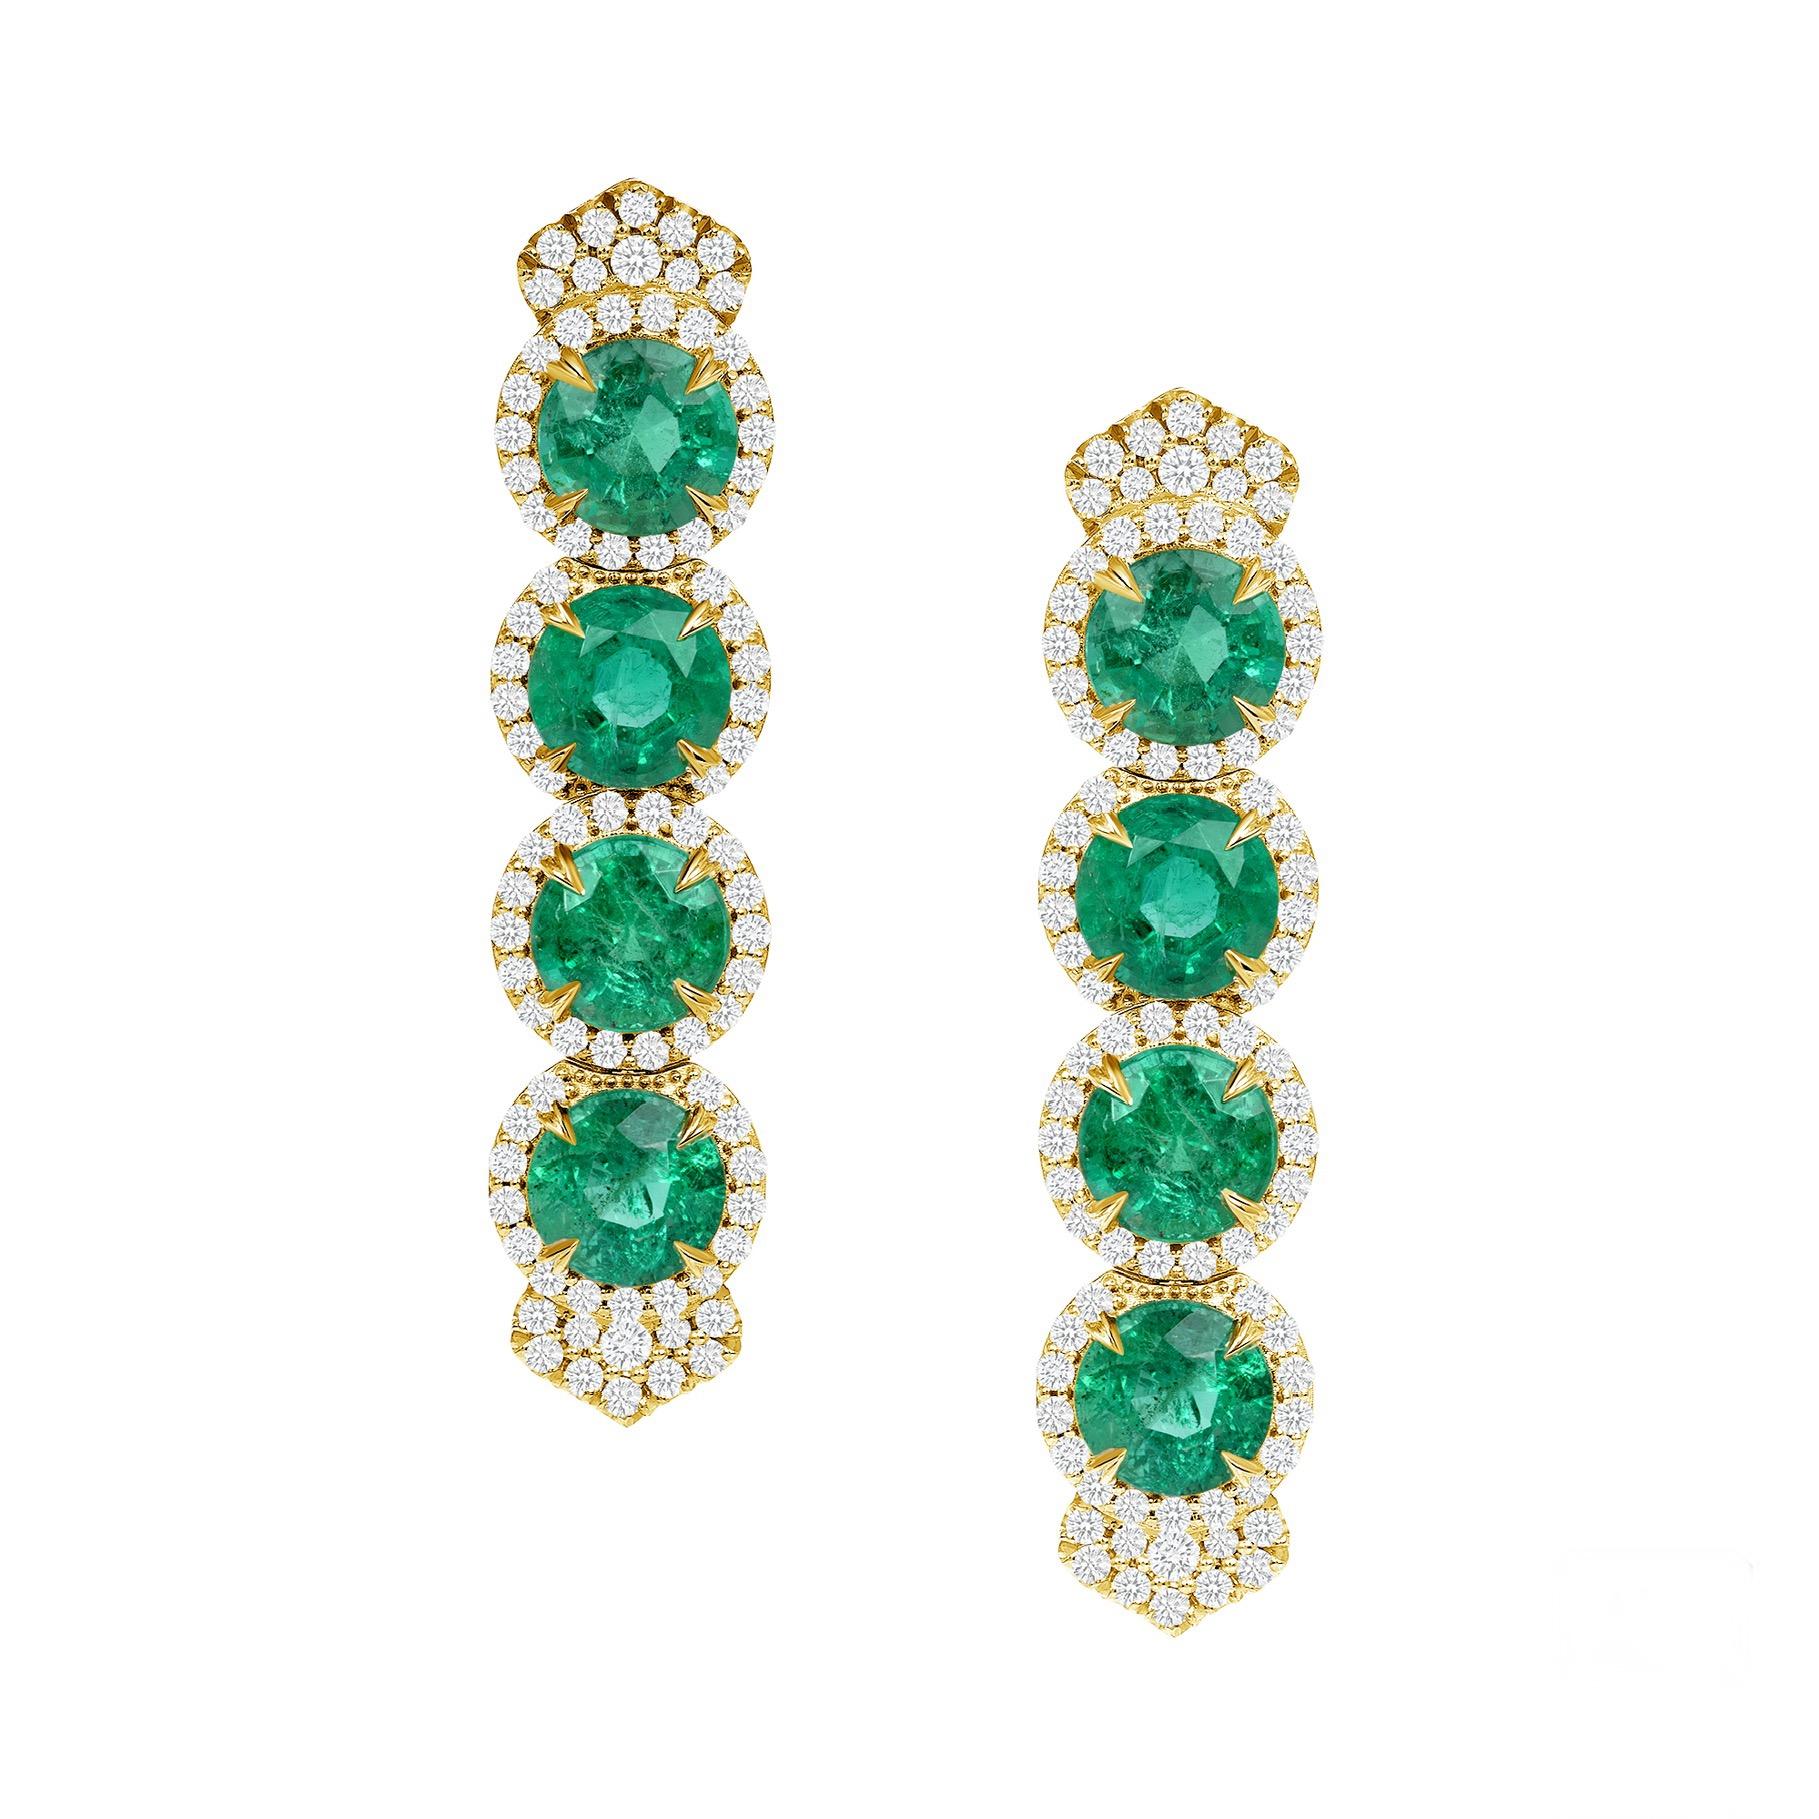 Round Cut 10.88ct Zambian Emerald earrings in 18K yellow gold. For Sale